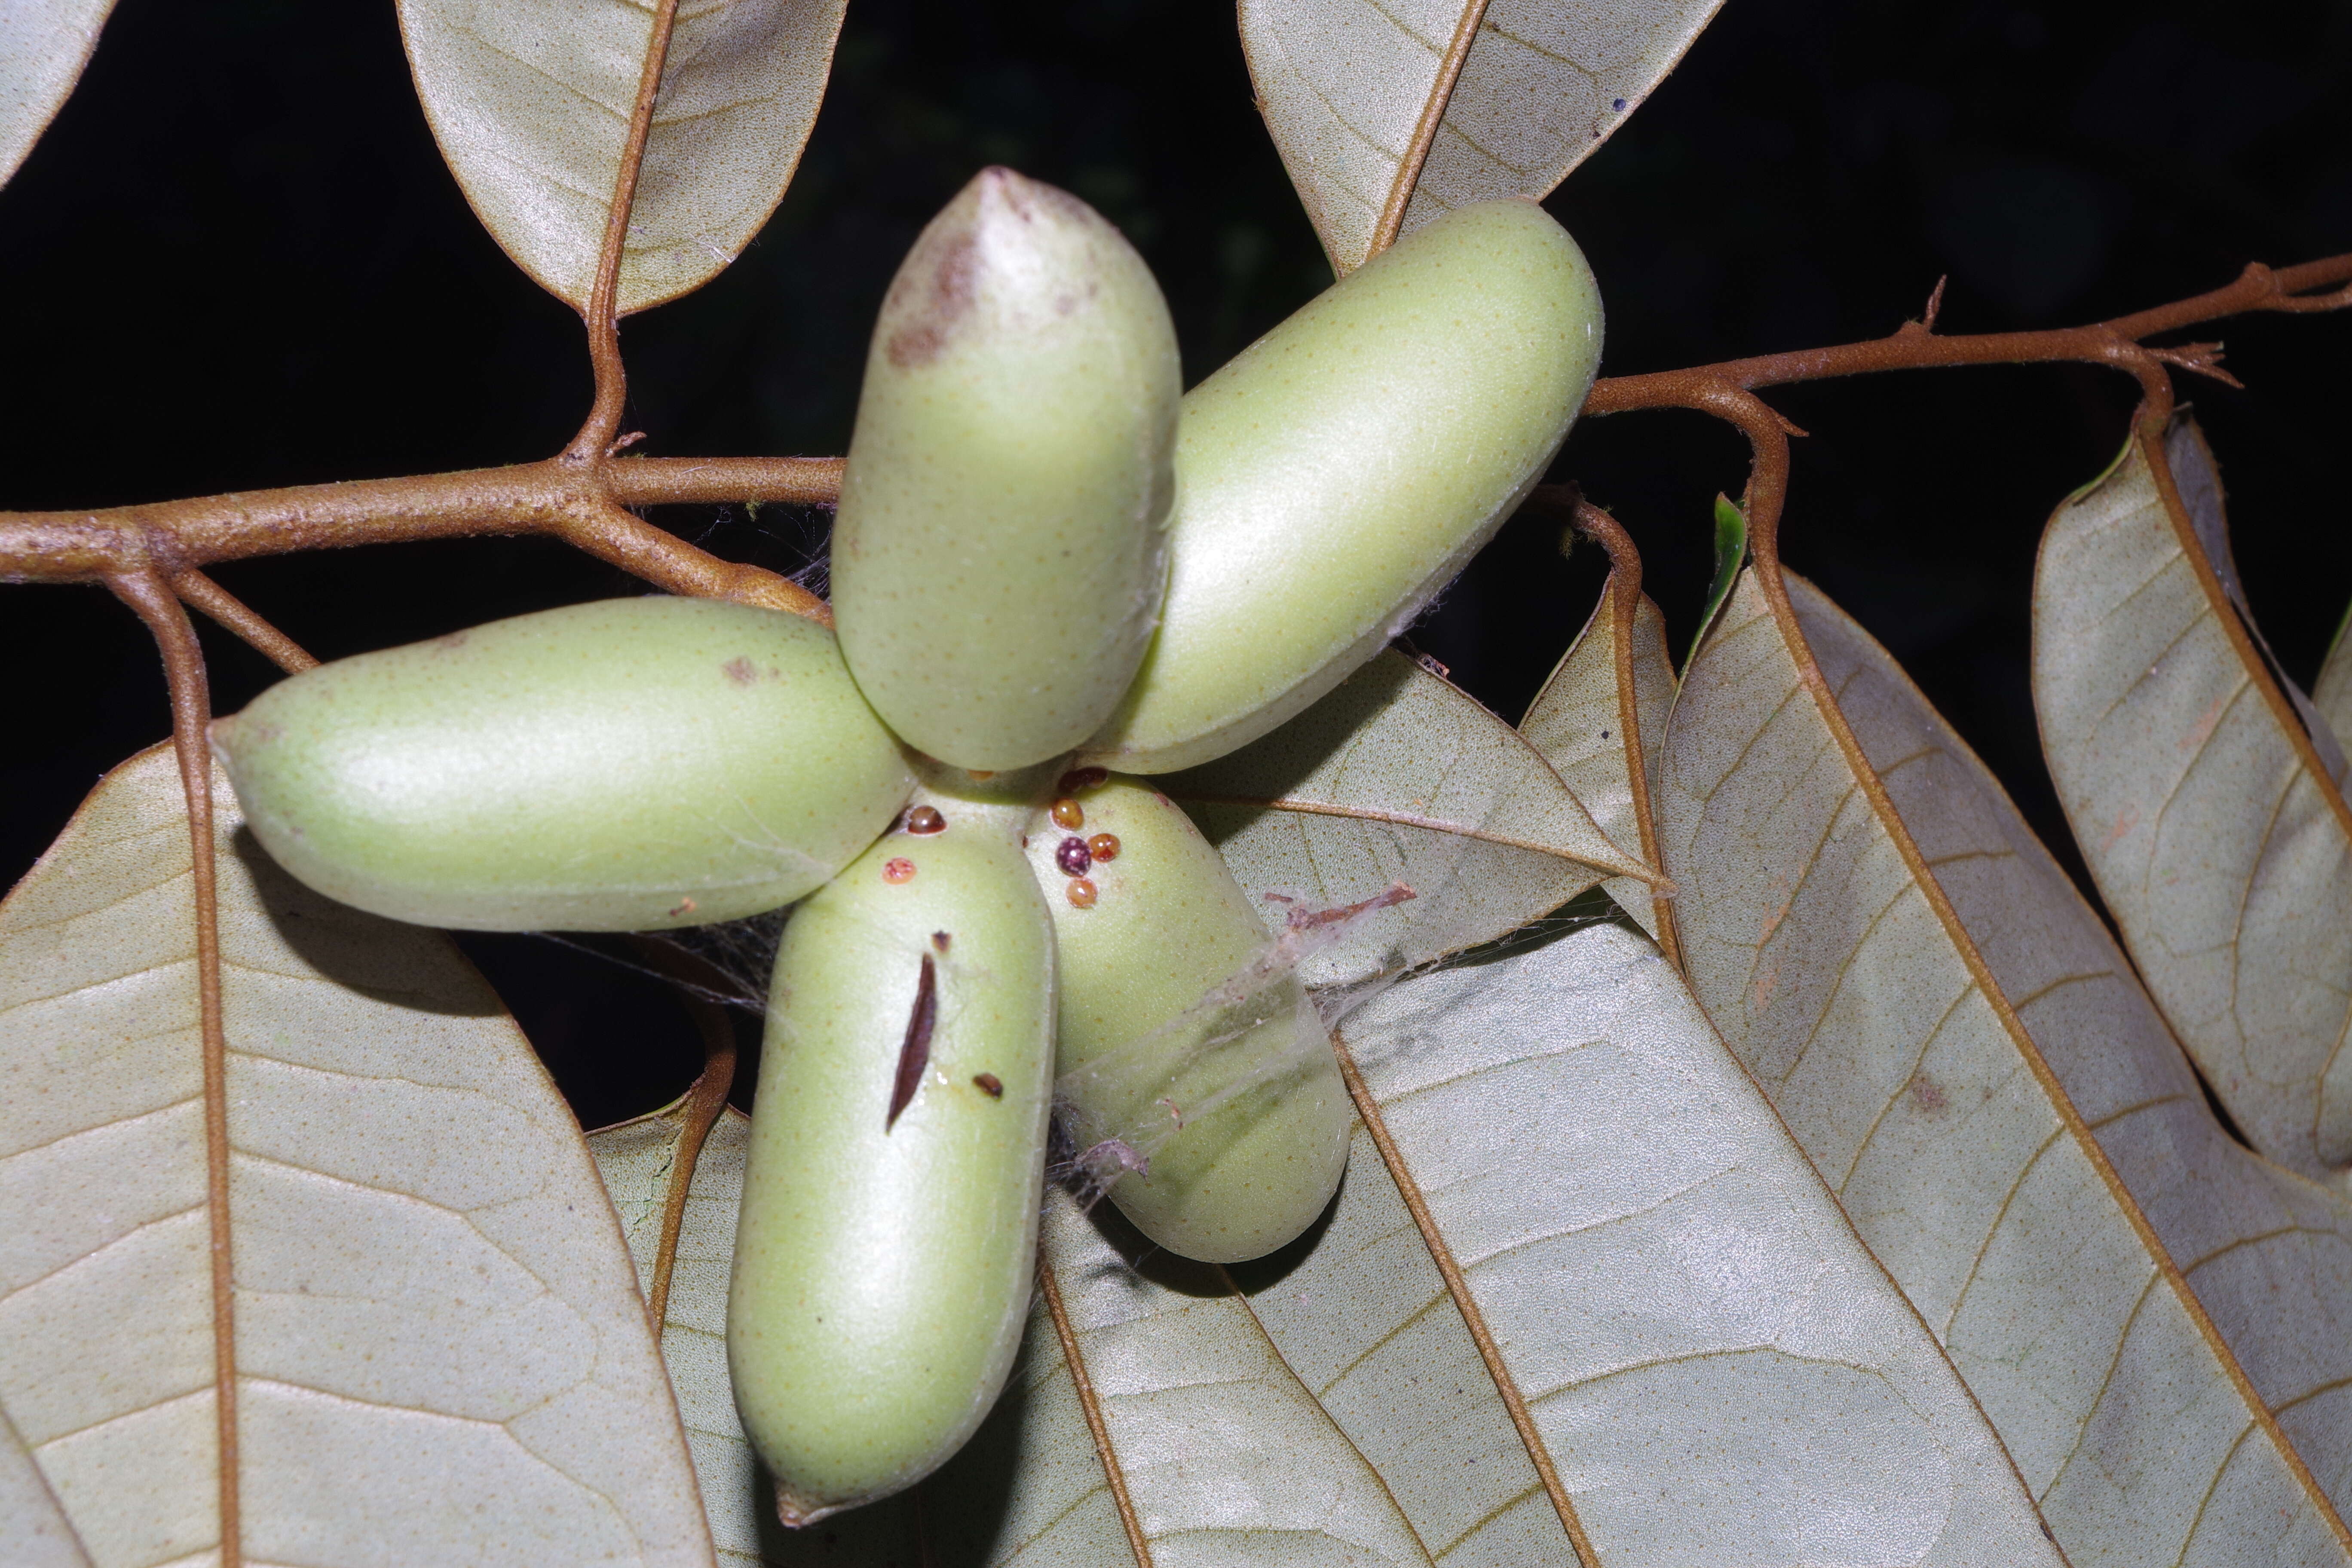 Image of Meiocarpidium lepidotum (Oliv.) Engl. & Diels